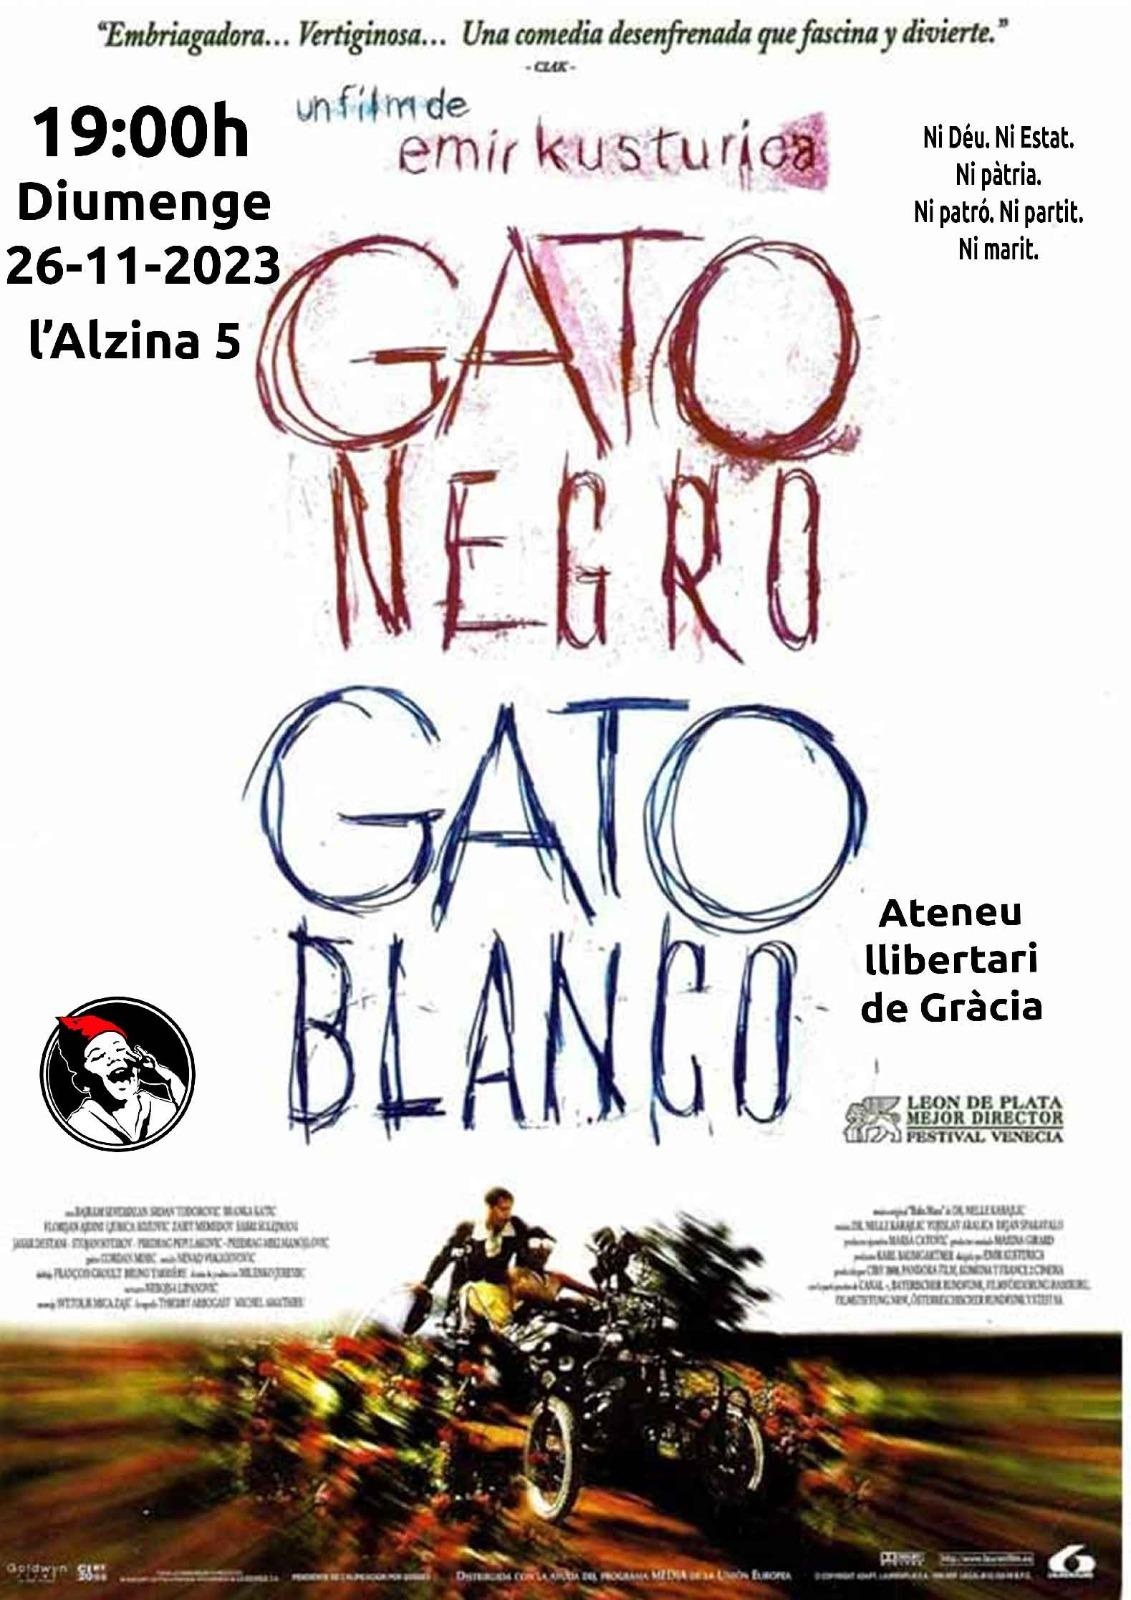 Cinefòrum: GATO NEGRO GATO BLANCO (1998)